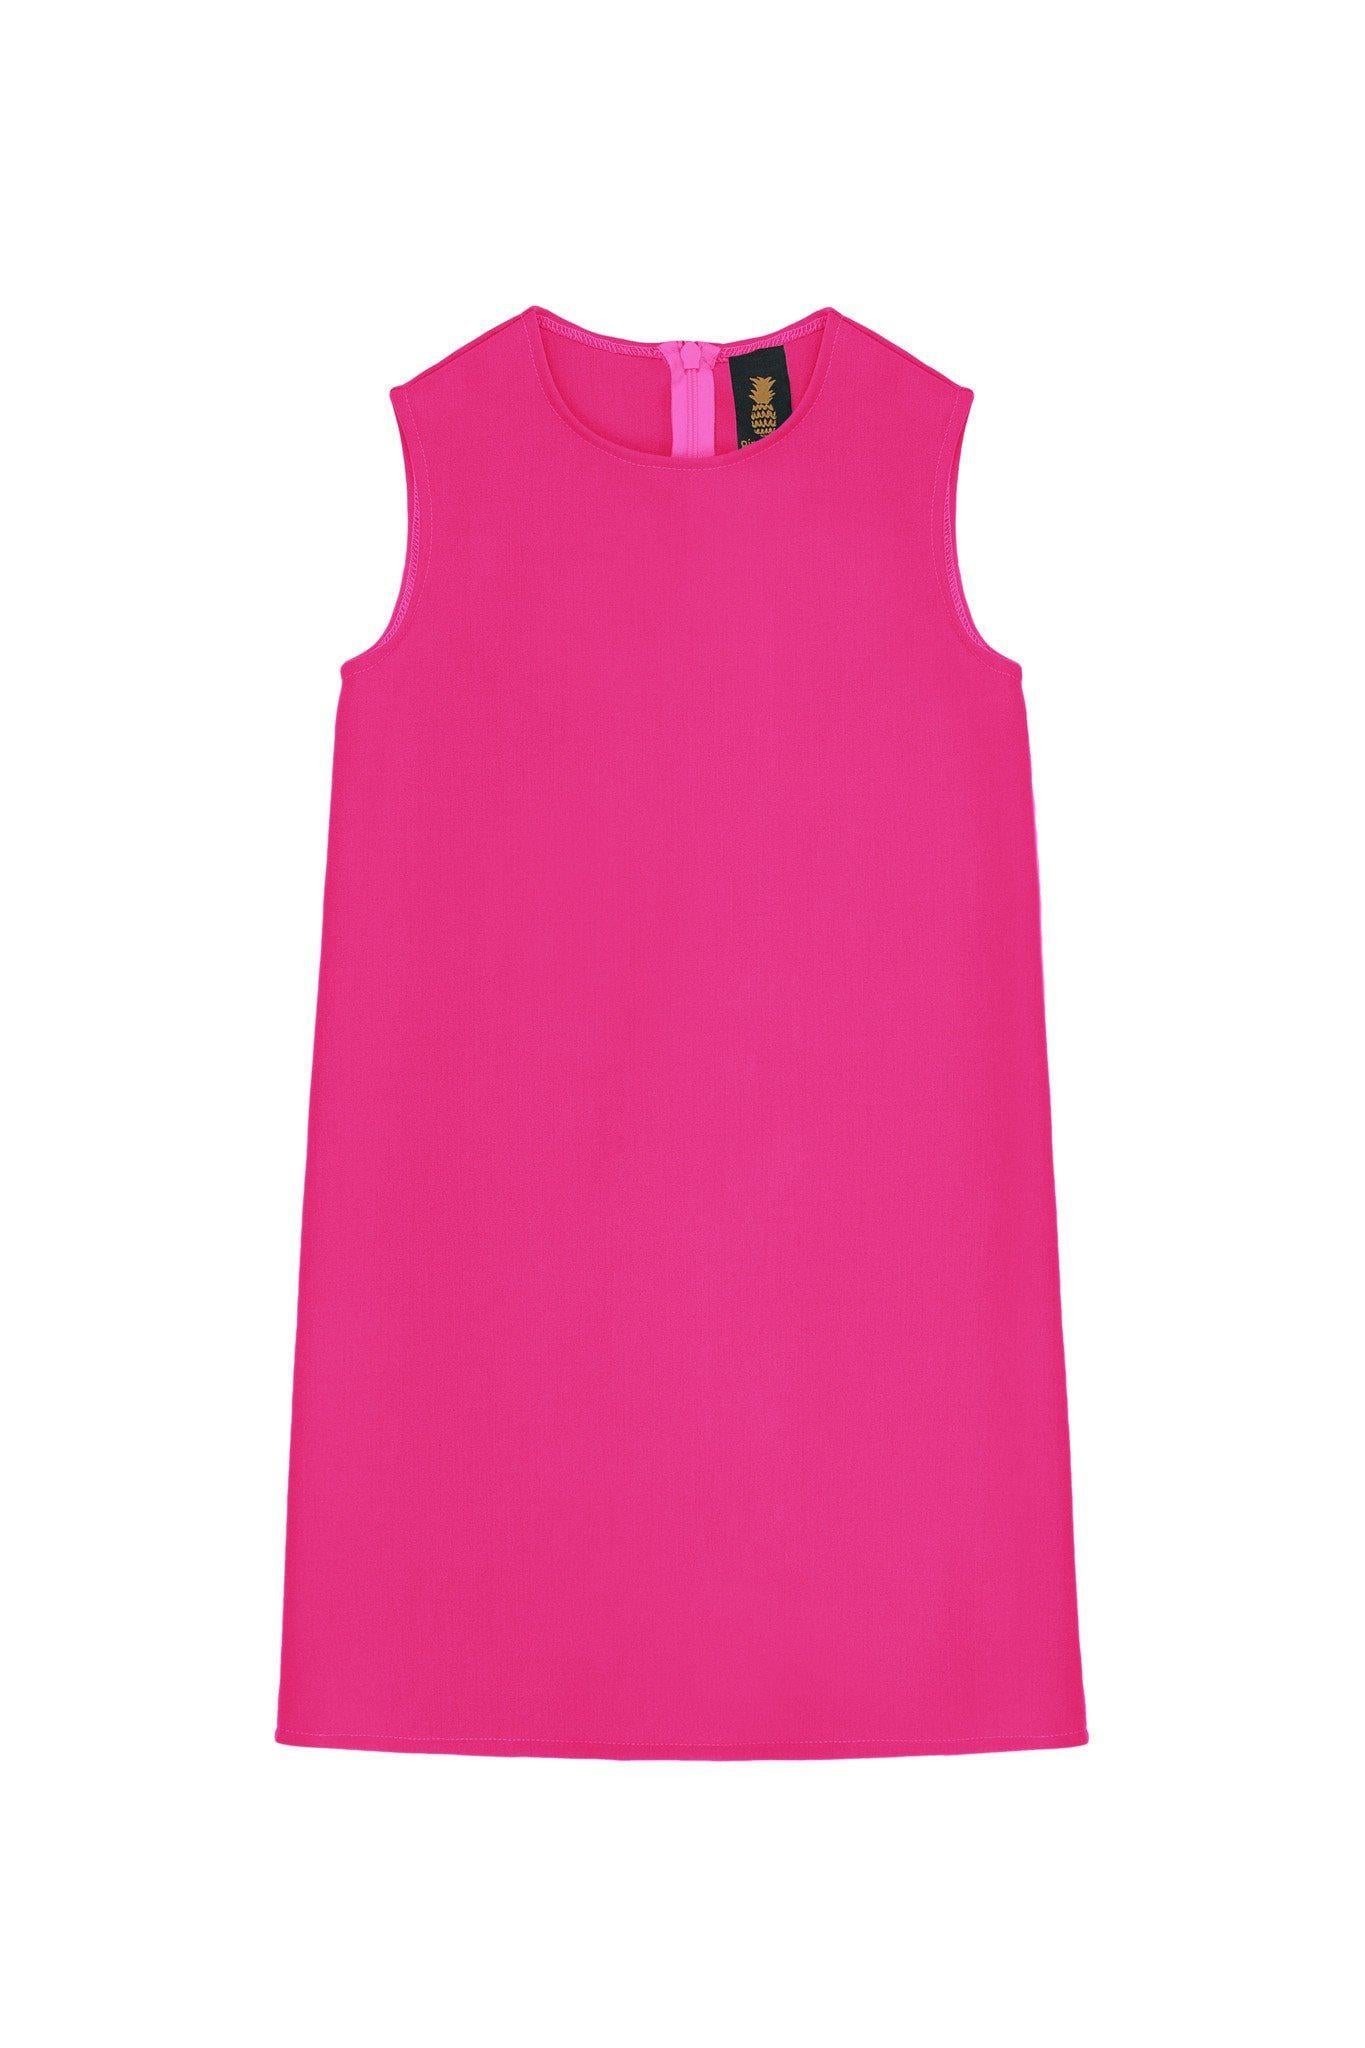 Fuchsia Hot Pink Stretchy Sleeveless Cute Summer Shift Dress - Girls - Pineapple Clothing